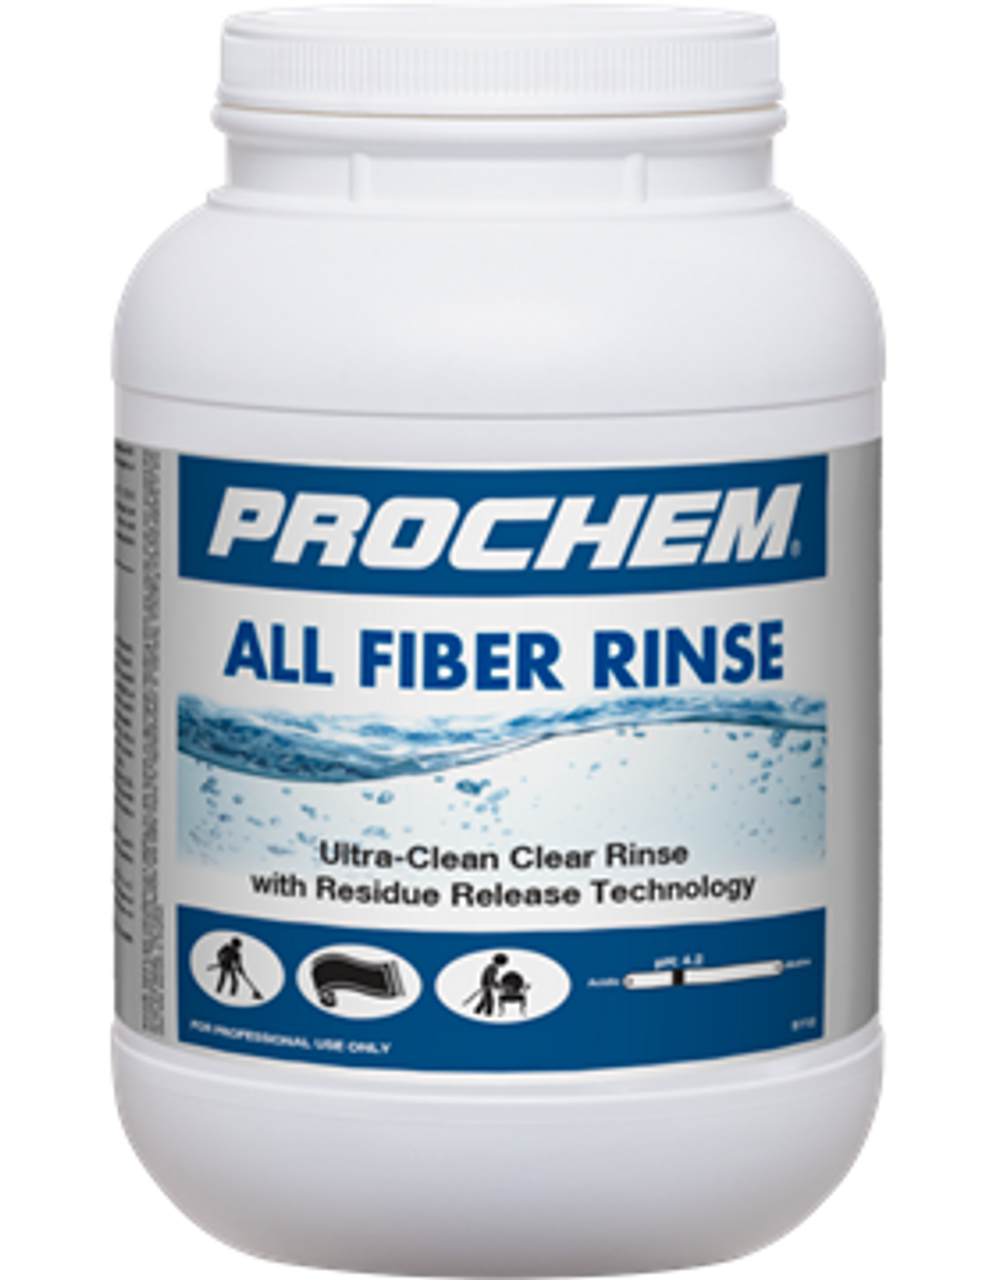 Prochem All Fiber Rinse - 4lbs - CASE of 4ea